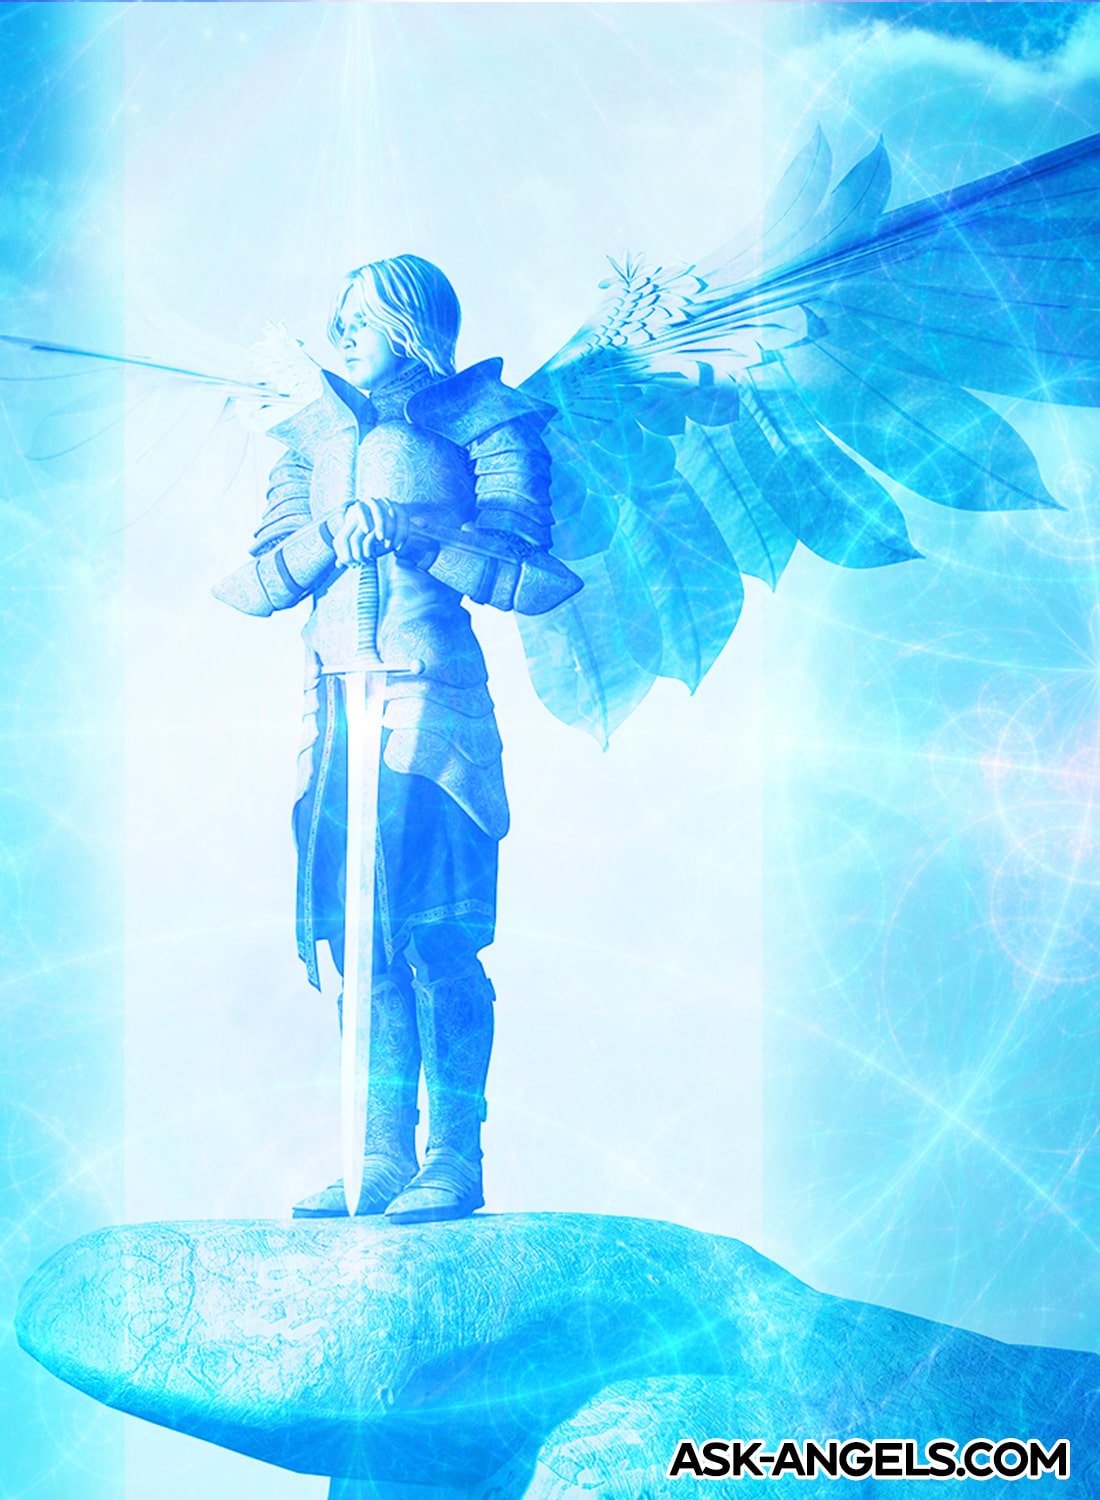 Archangel Michael's Sword - A Powerful Spiritual Tool